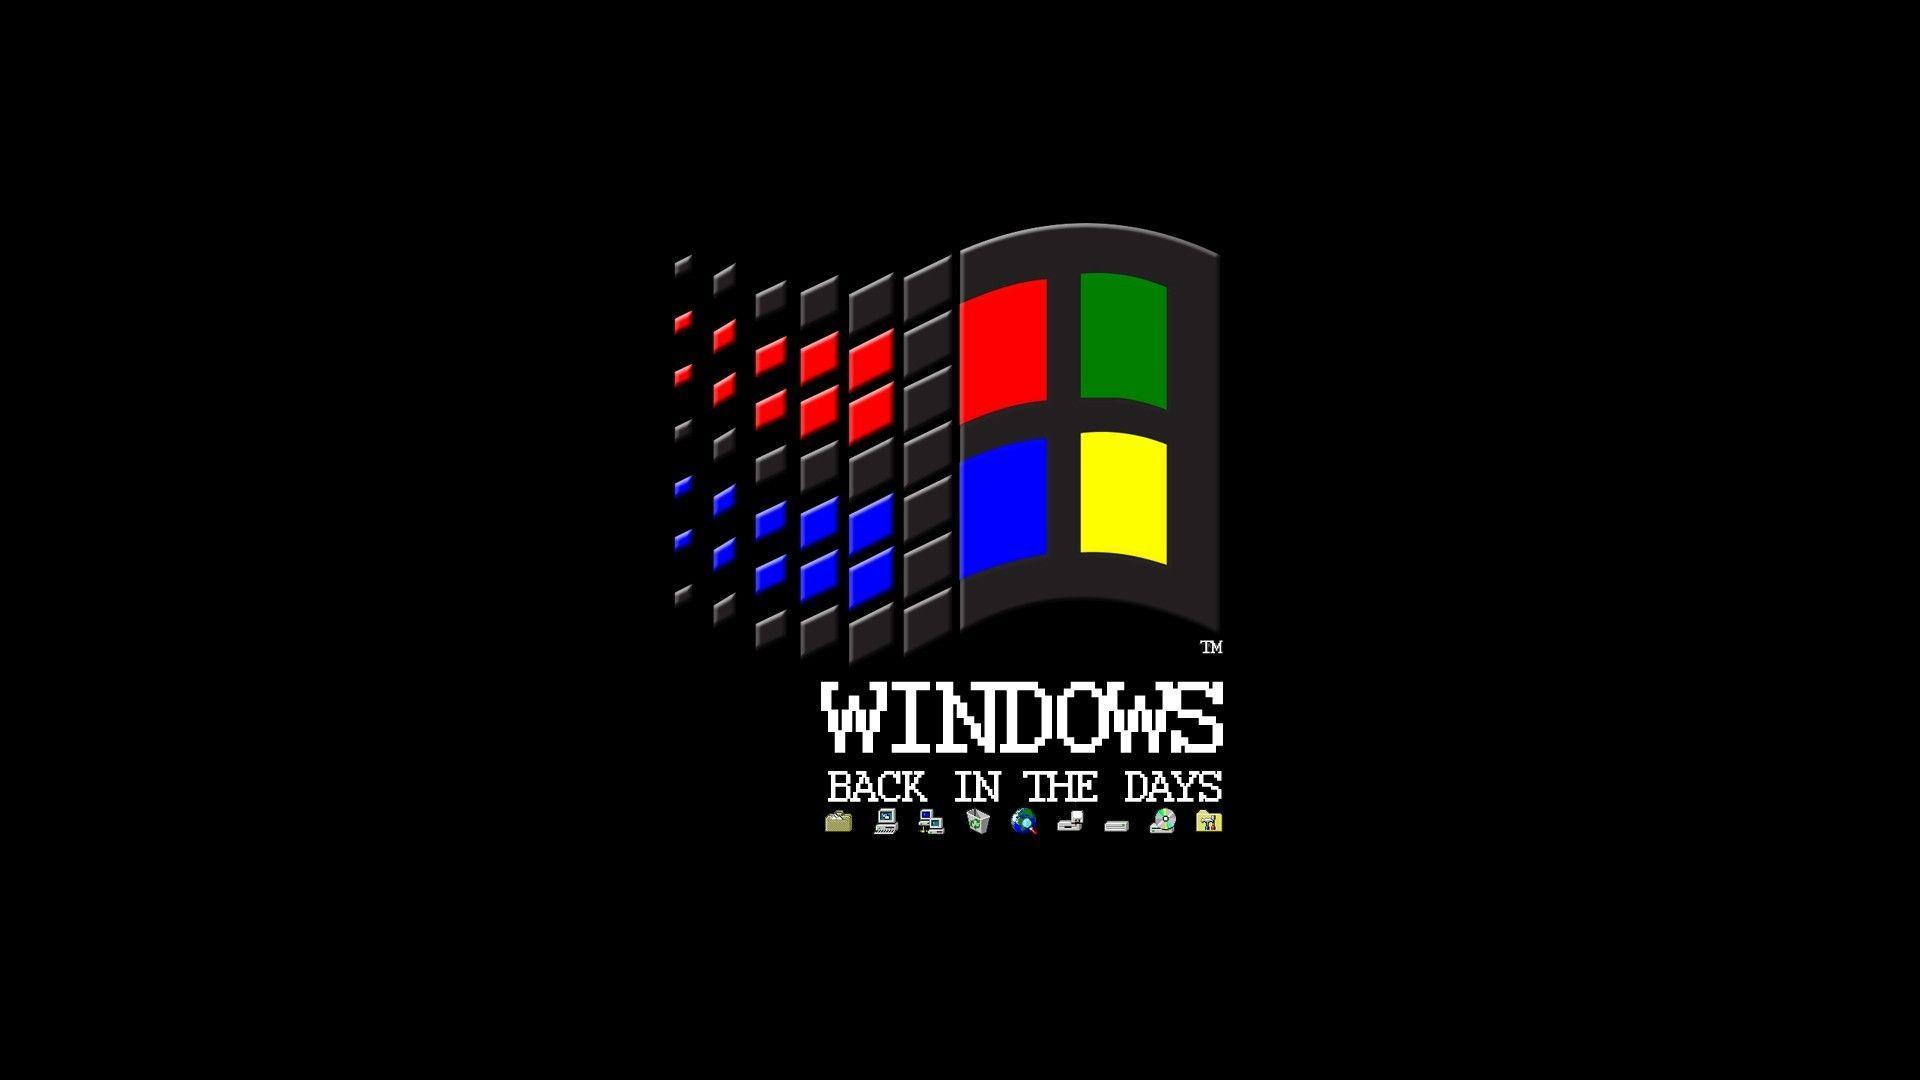 MS-DOS Logo - Black Background, Floppy Disk, MS DOS, Internet, Microsoft Windows ...